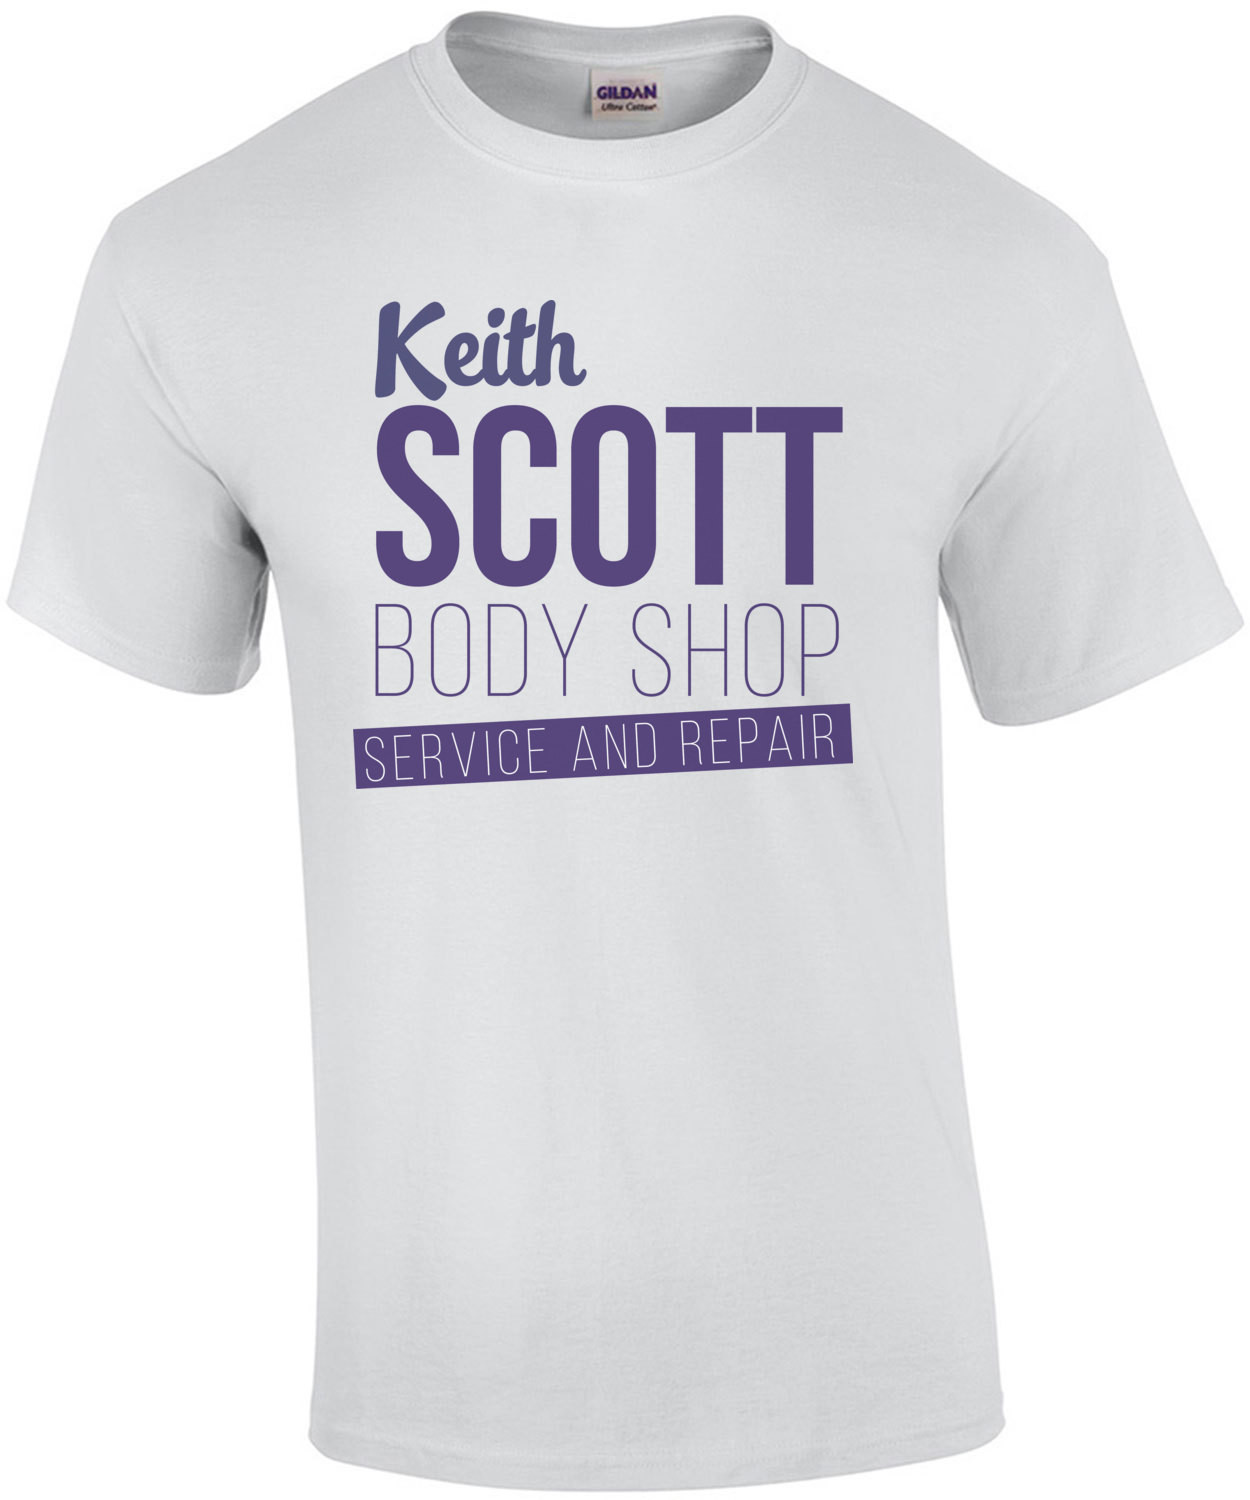 Keith Scott Body Shop Serivce and Repair - one tree hill t-shirt